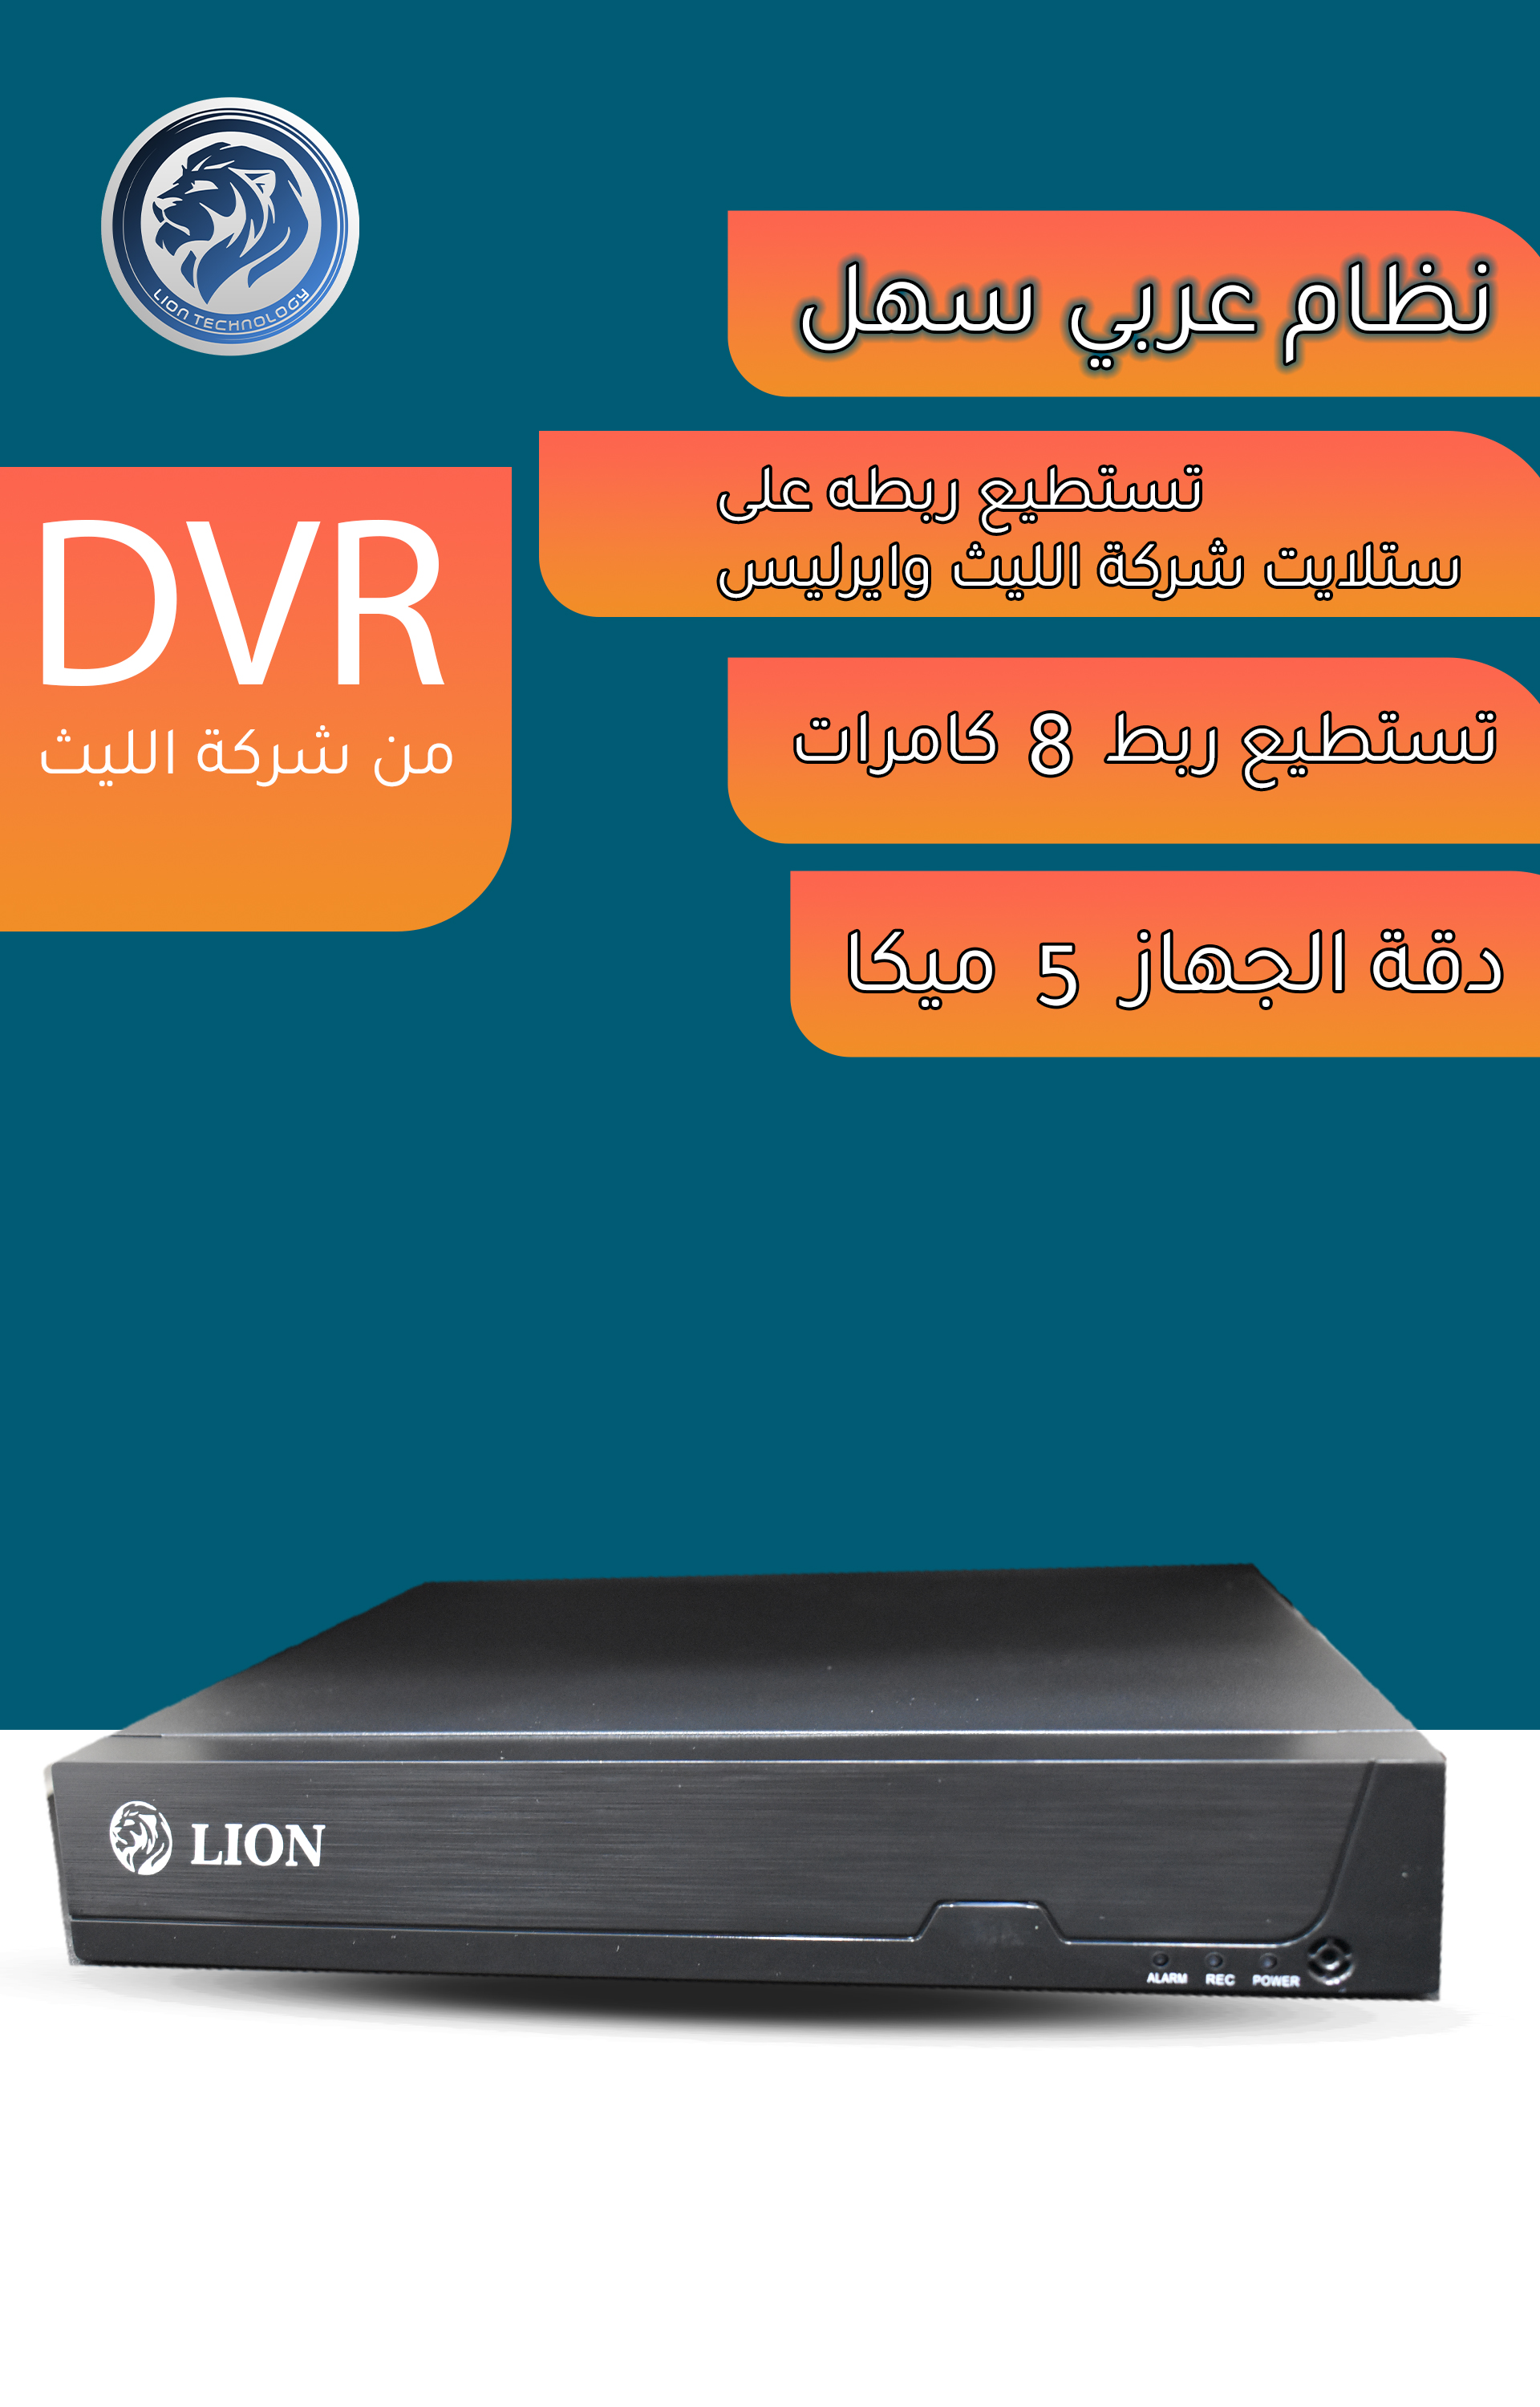 DVR ثماني 8 كامرات